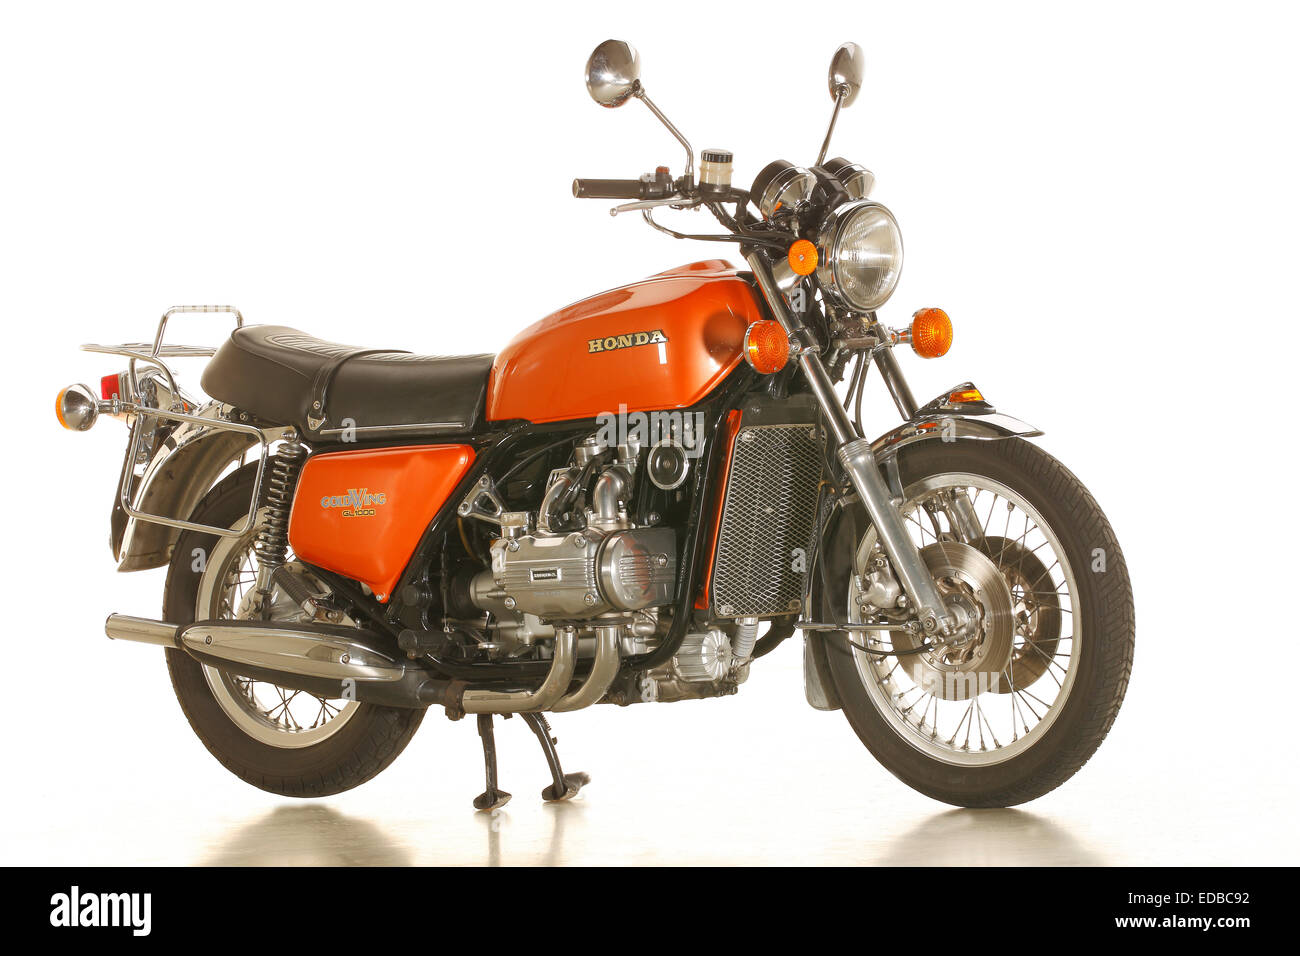 Motorcycle Honda Goldwing GL 1000 Stock Photo